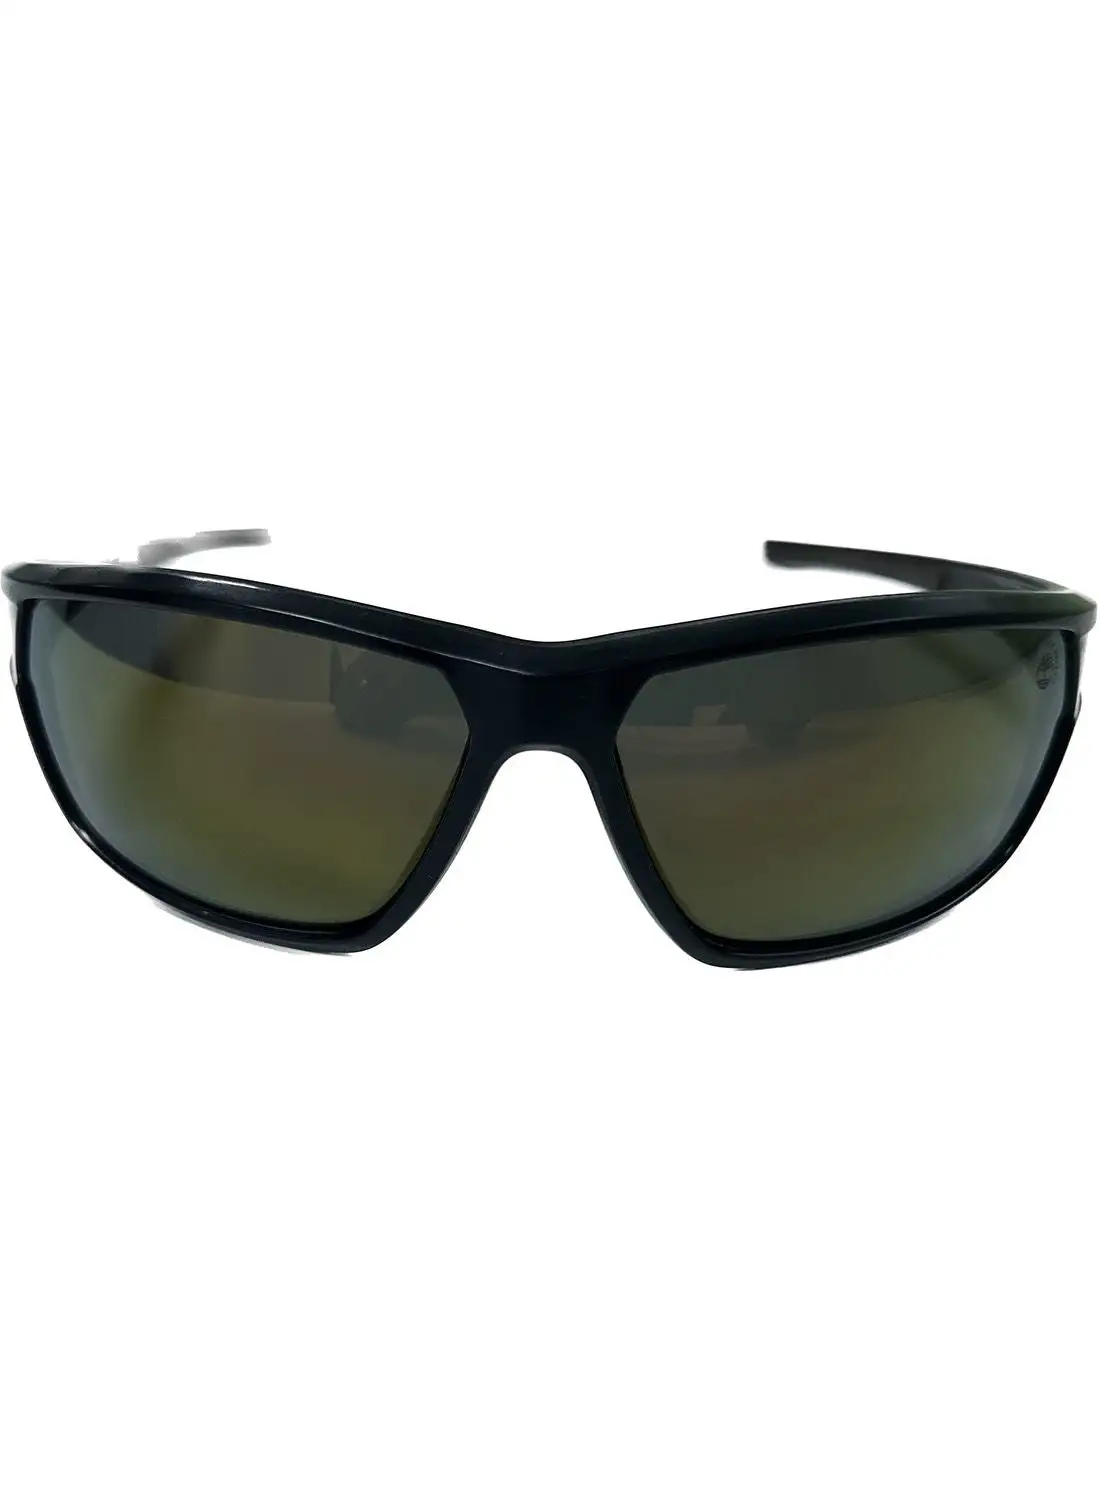 Timberland Men's Rectangular Sunglasses - TB926302D66 - Lens Size: 66 Mm